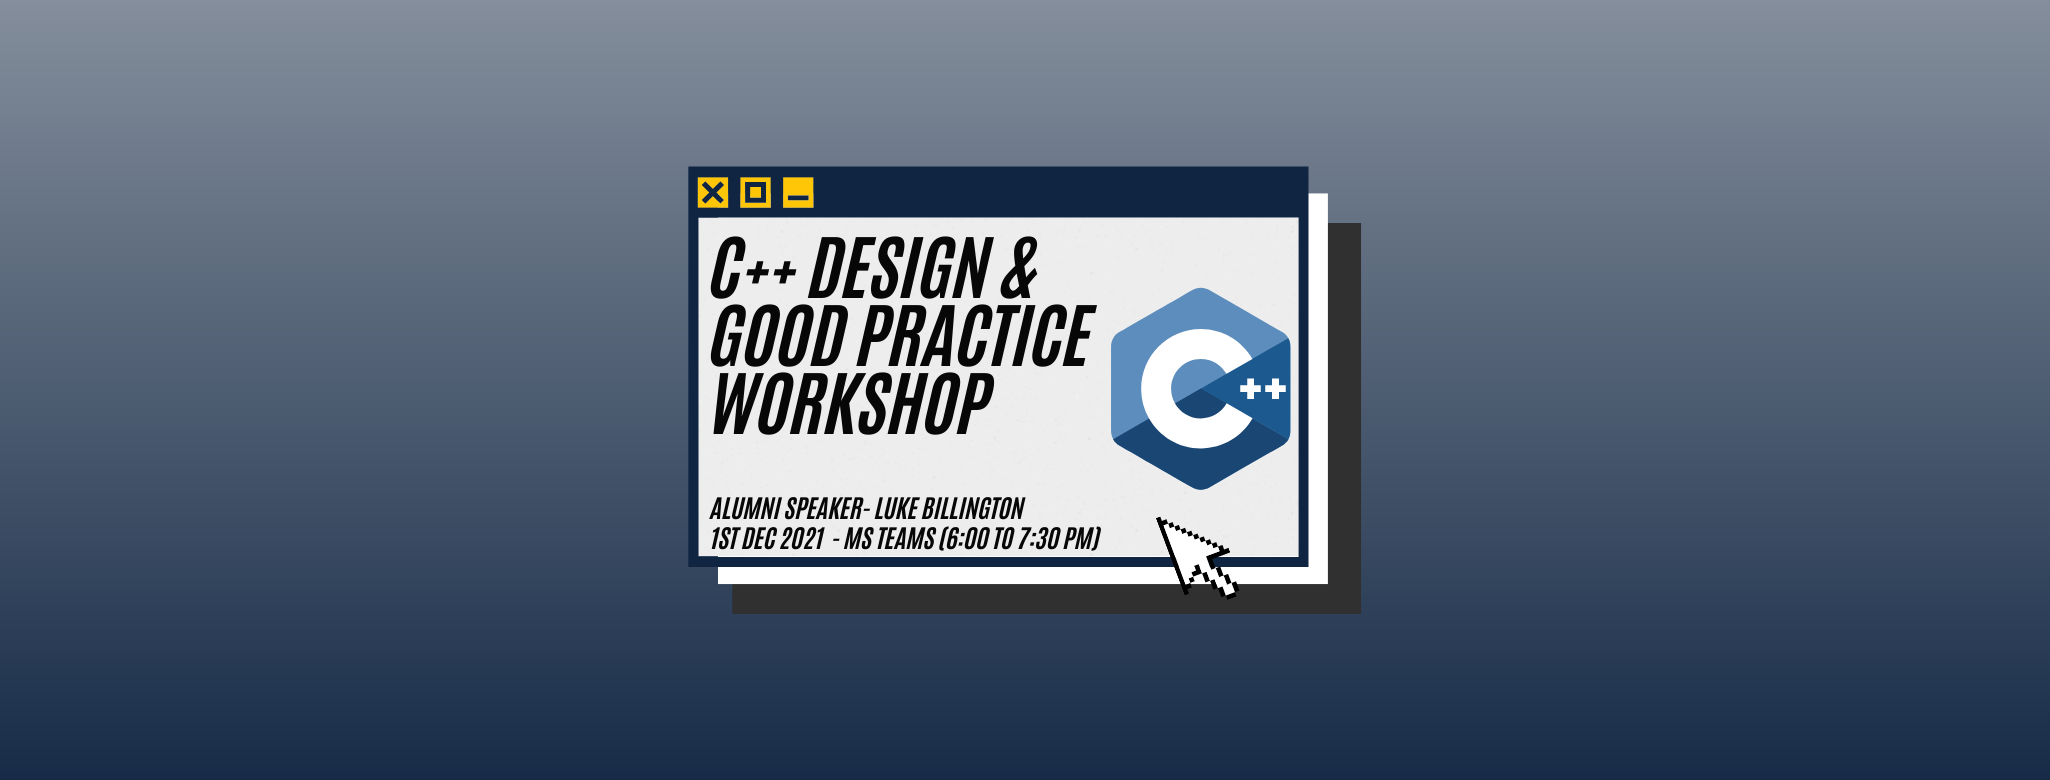 C++ Workshop Banner